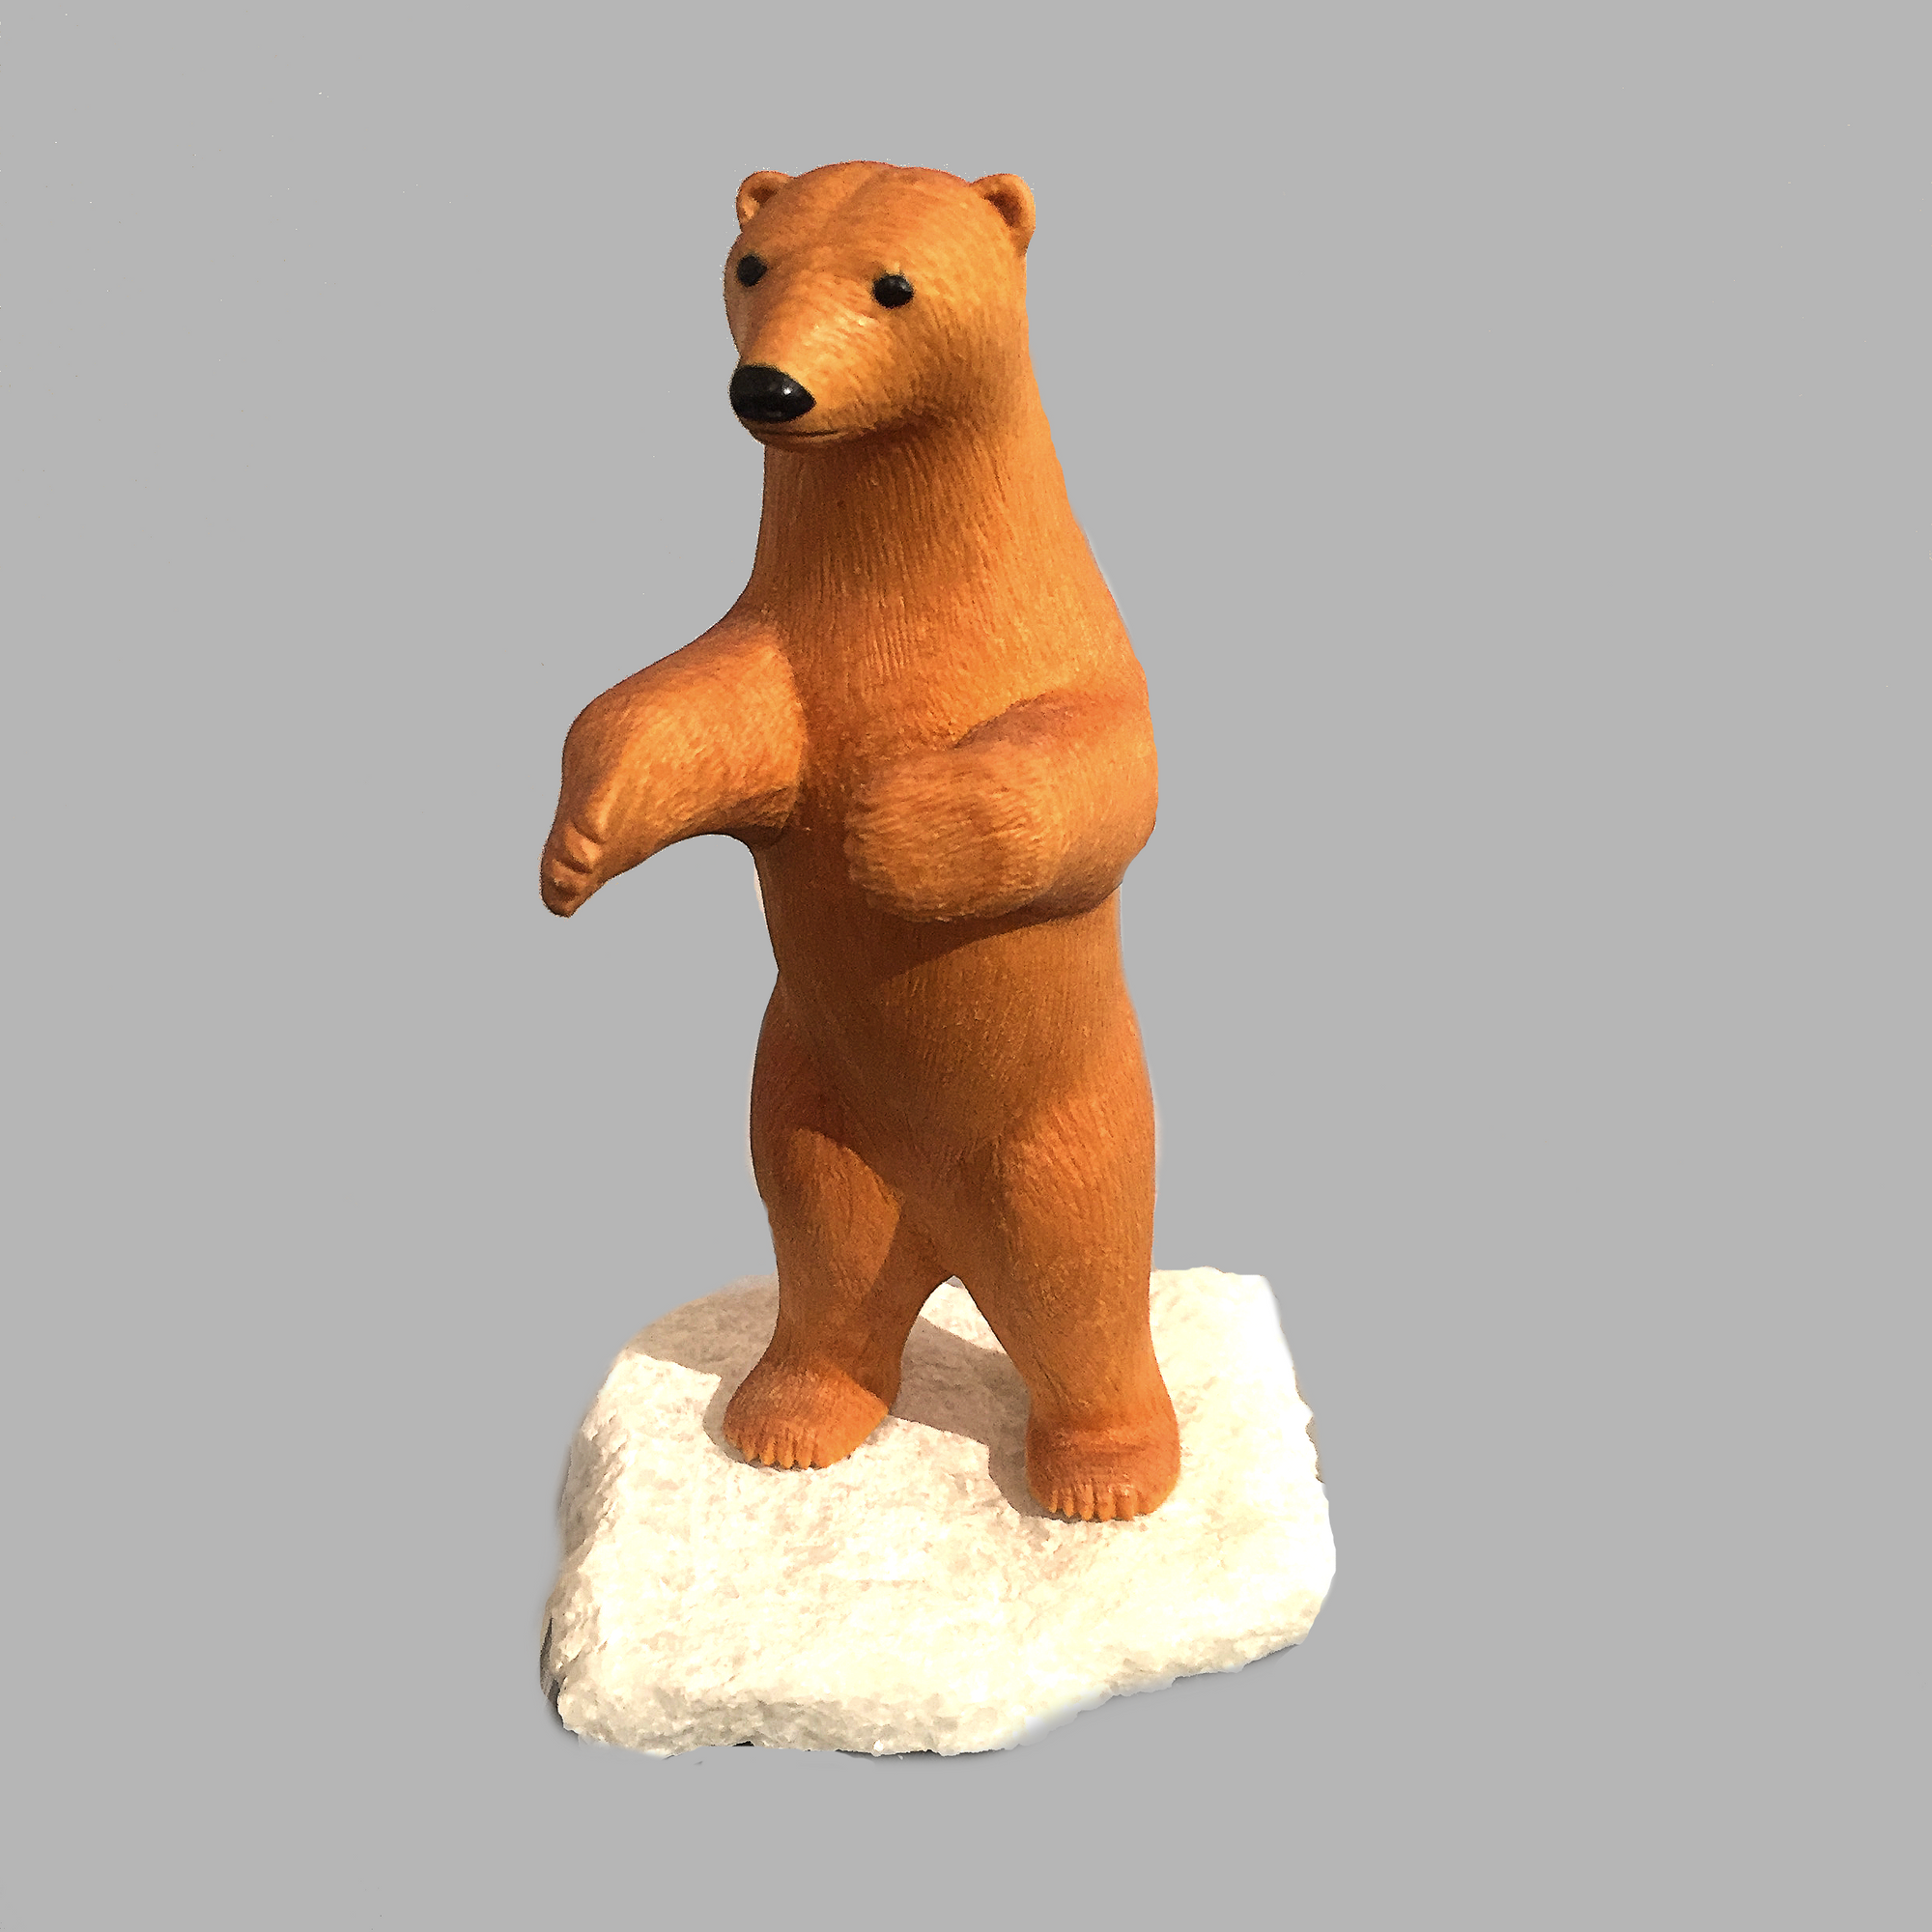 Polar Bear Miniature Animal wood carving by Salt Spring Island artist Jim Dearing